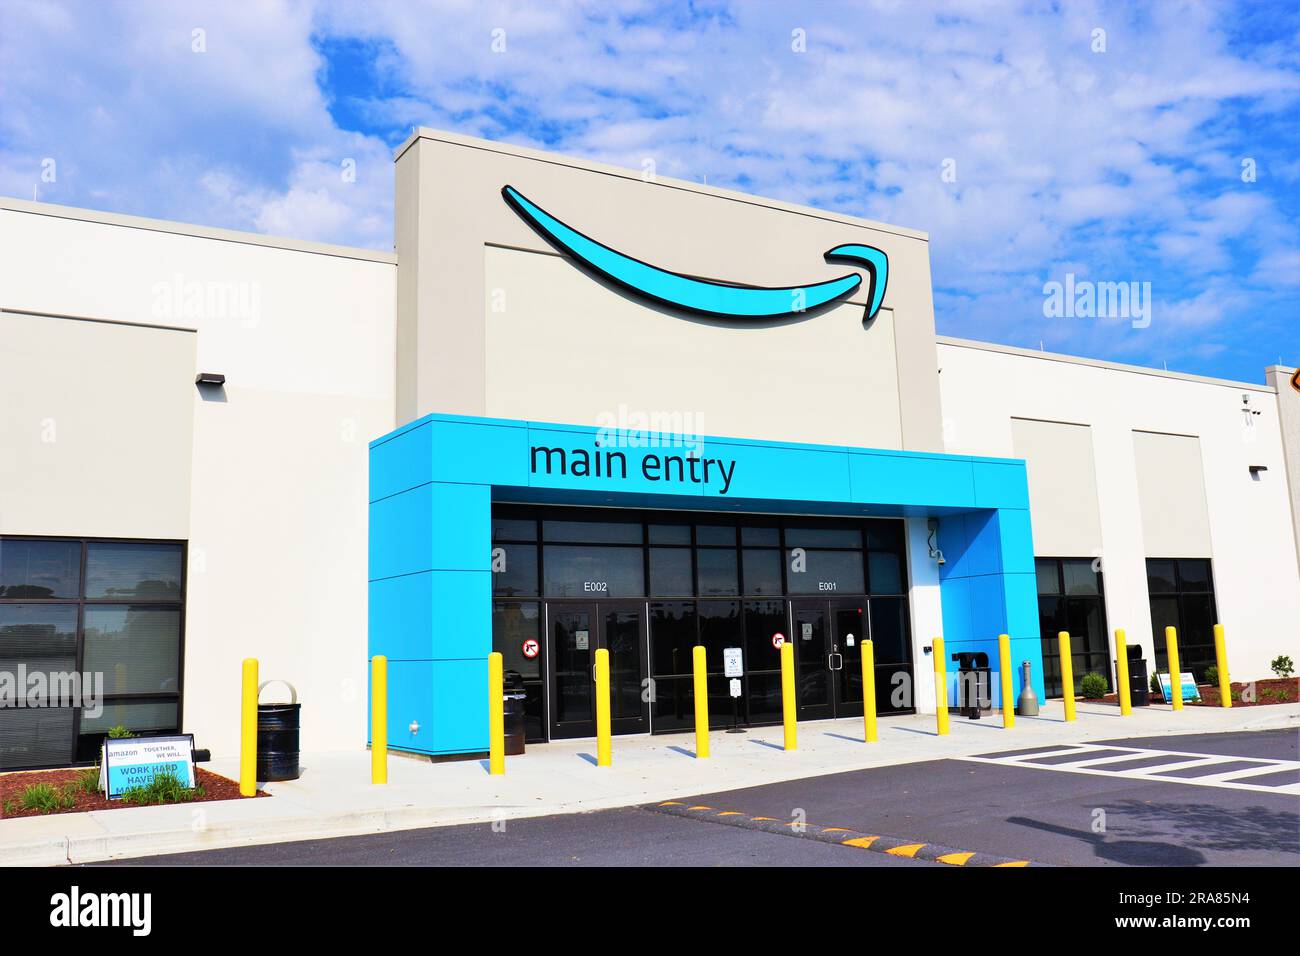 Amazon new warehouse building main entry with arrow smile logo. Stock Photo